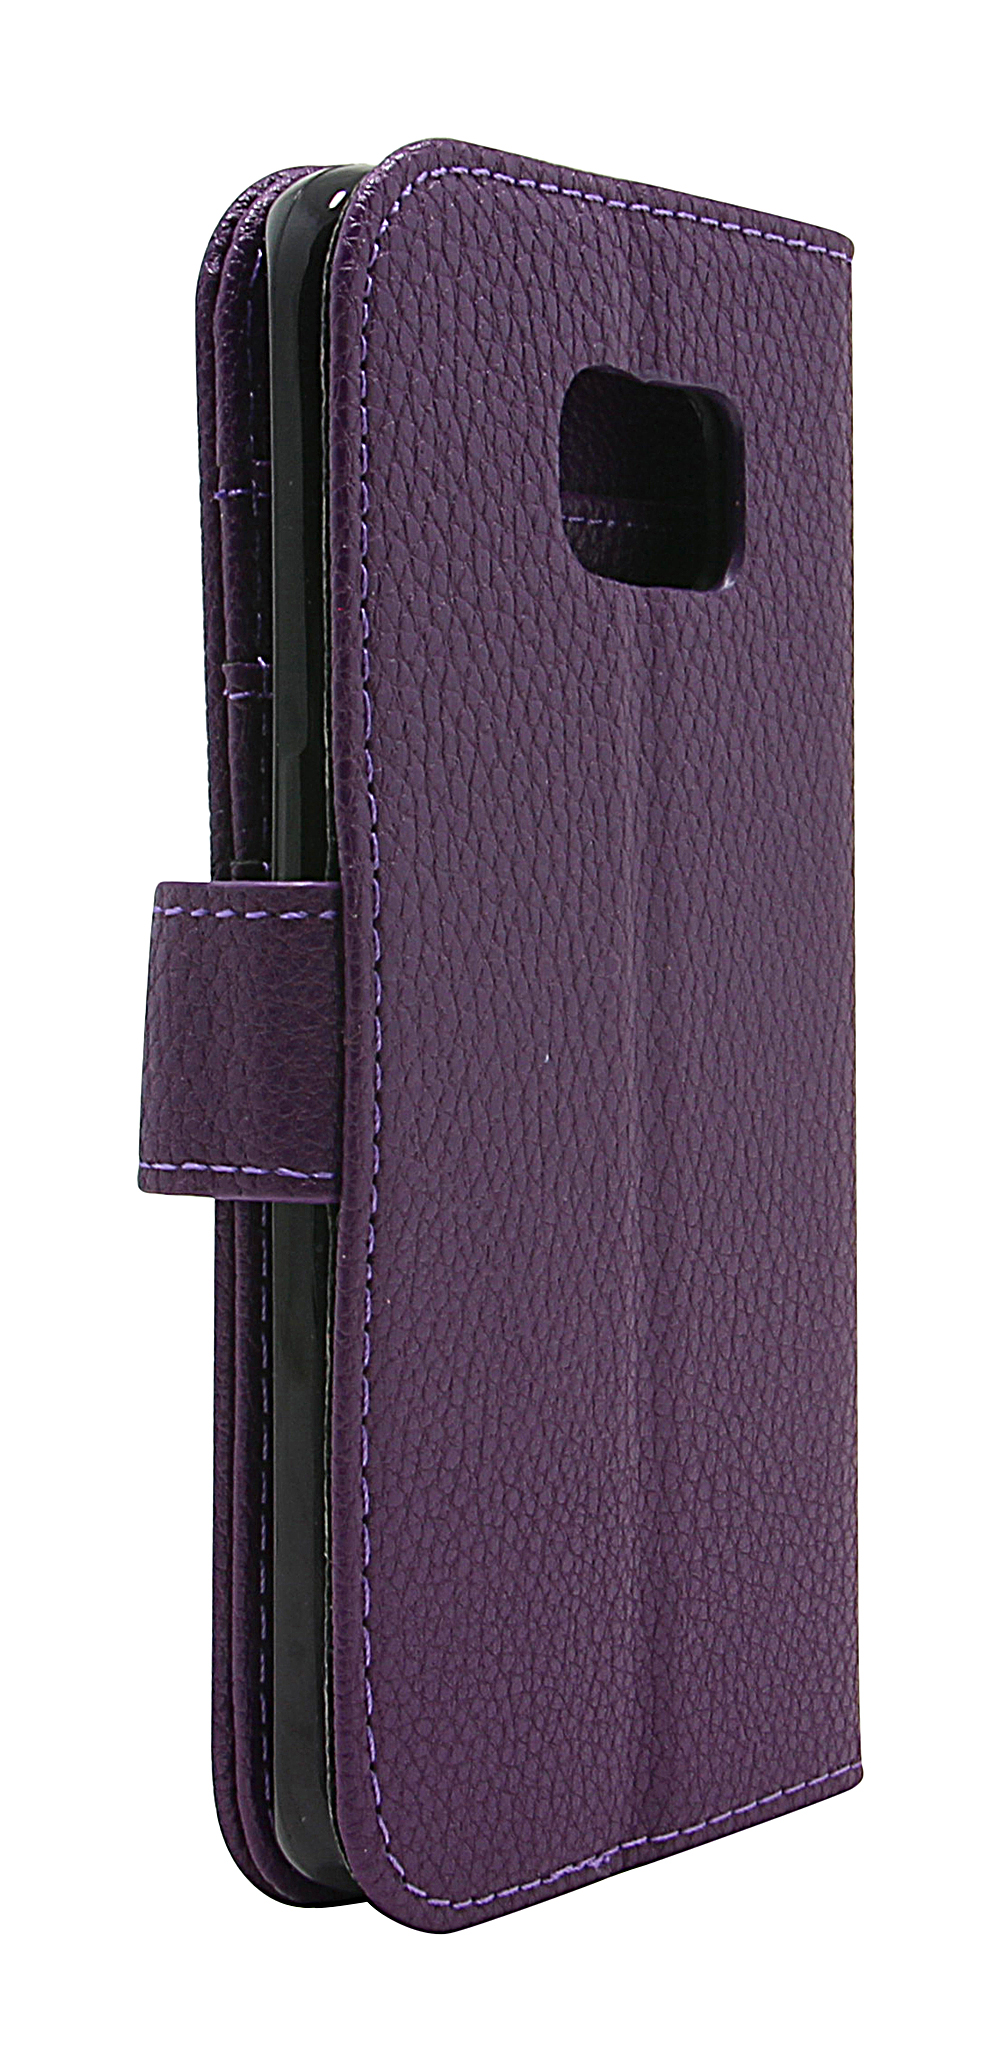 billigamobilskydd.seNew Standcase Wallet Samsung Galaxy S6 Edge (G925F)